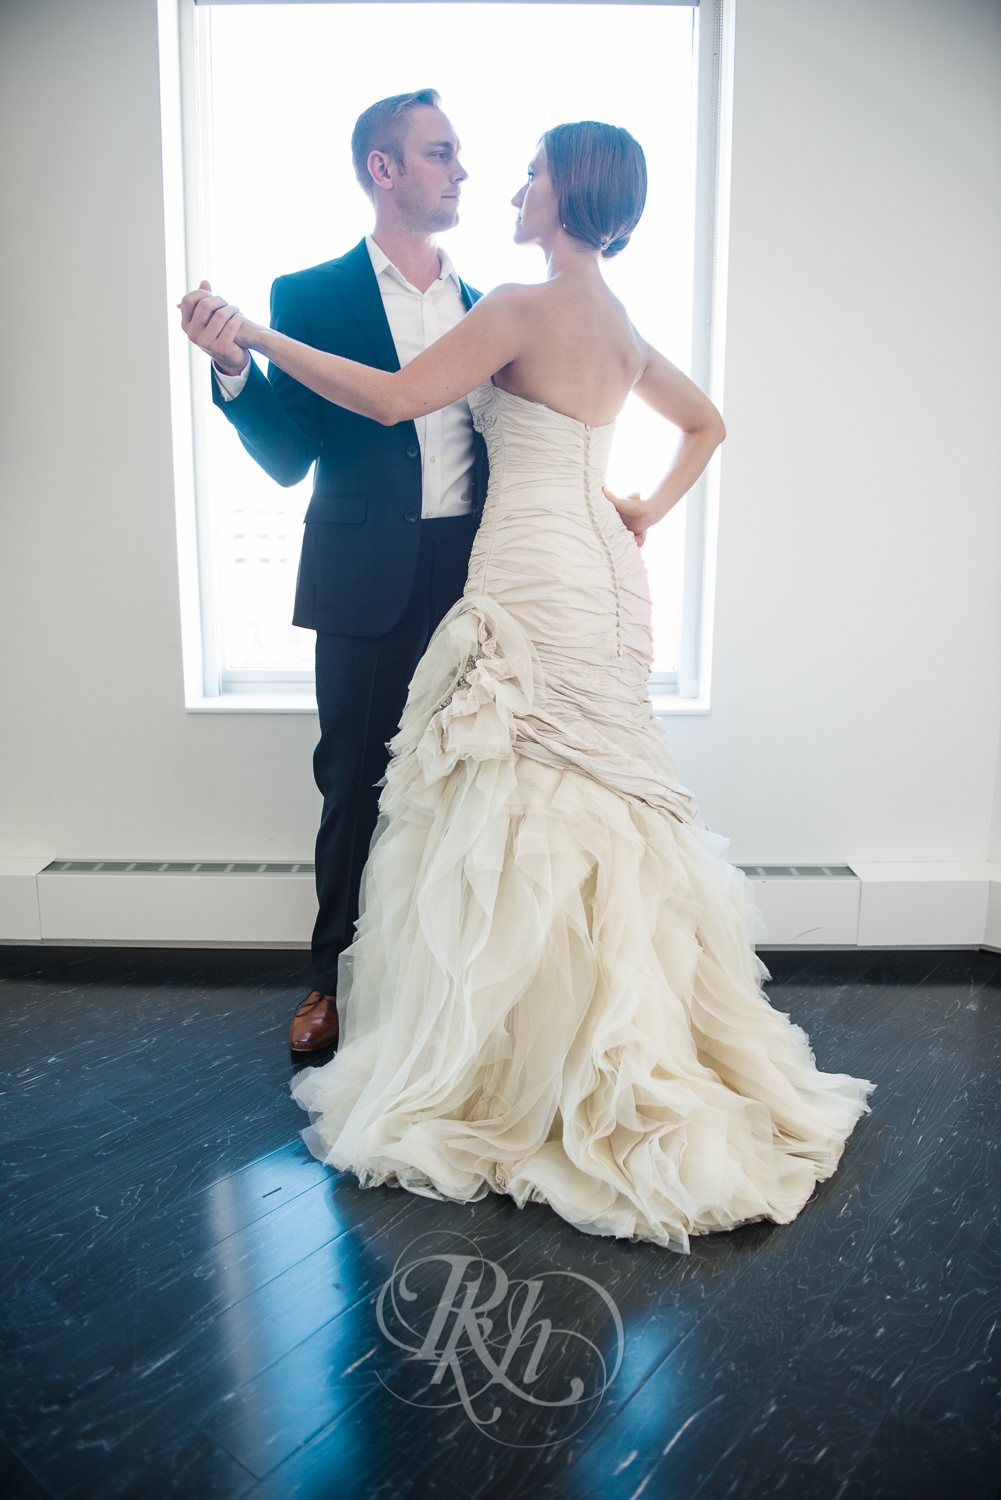  Minneapolis Wedding Photography - Becca & Justin - RKH Images-27 